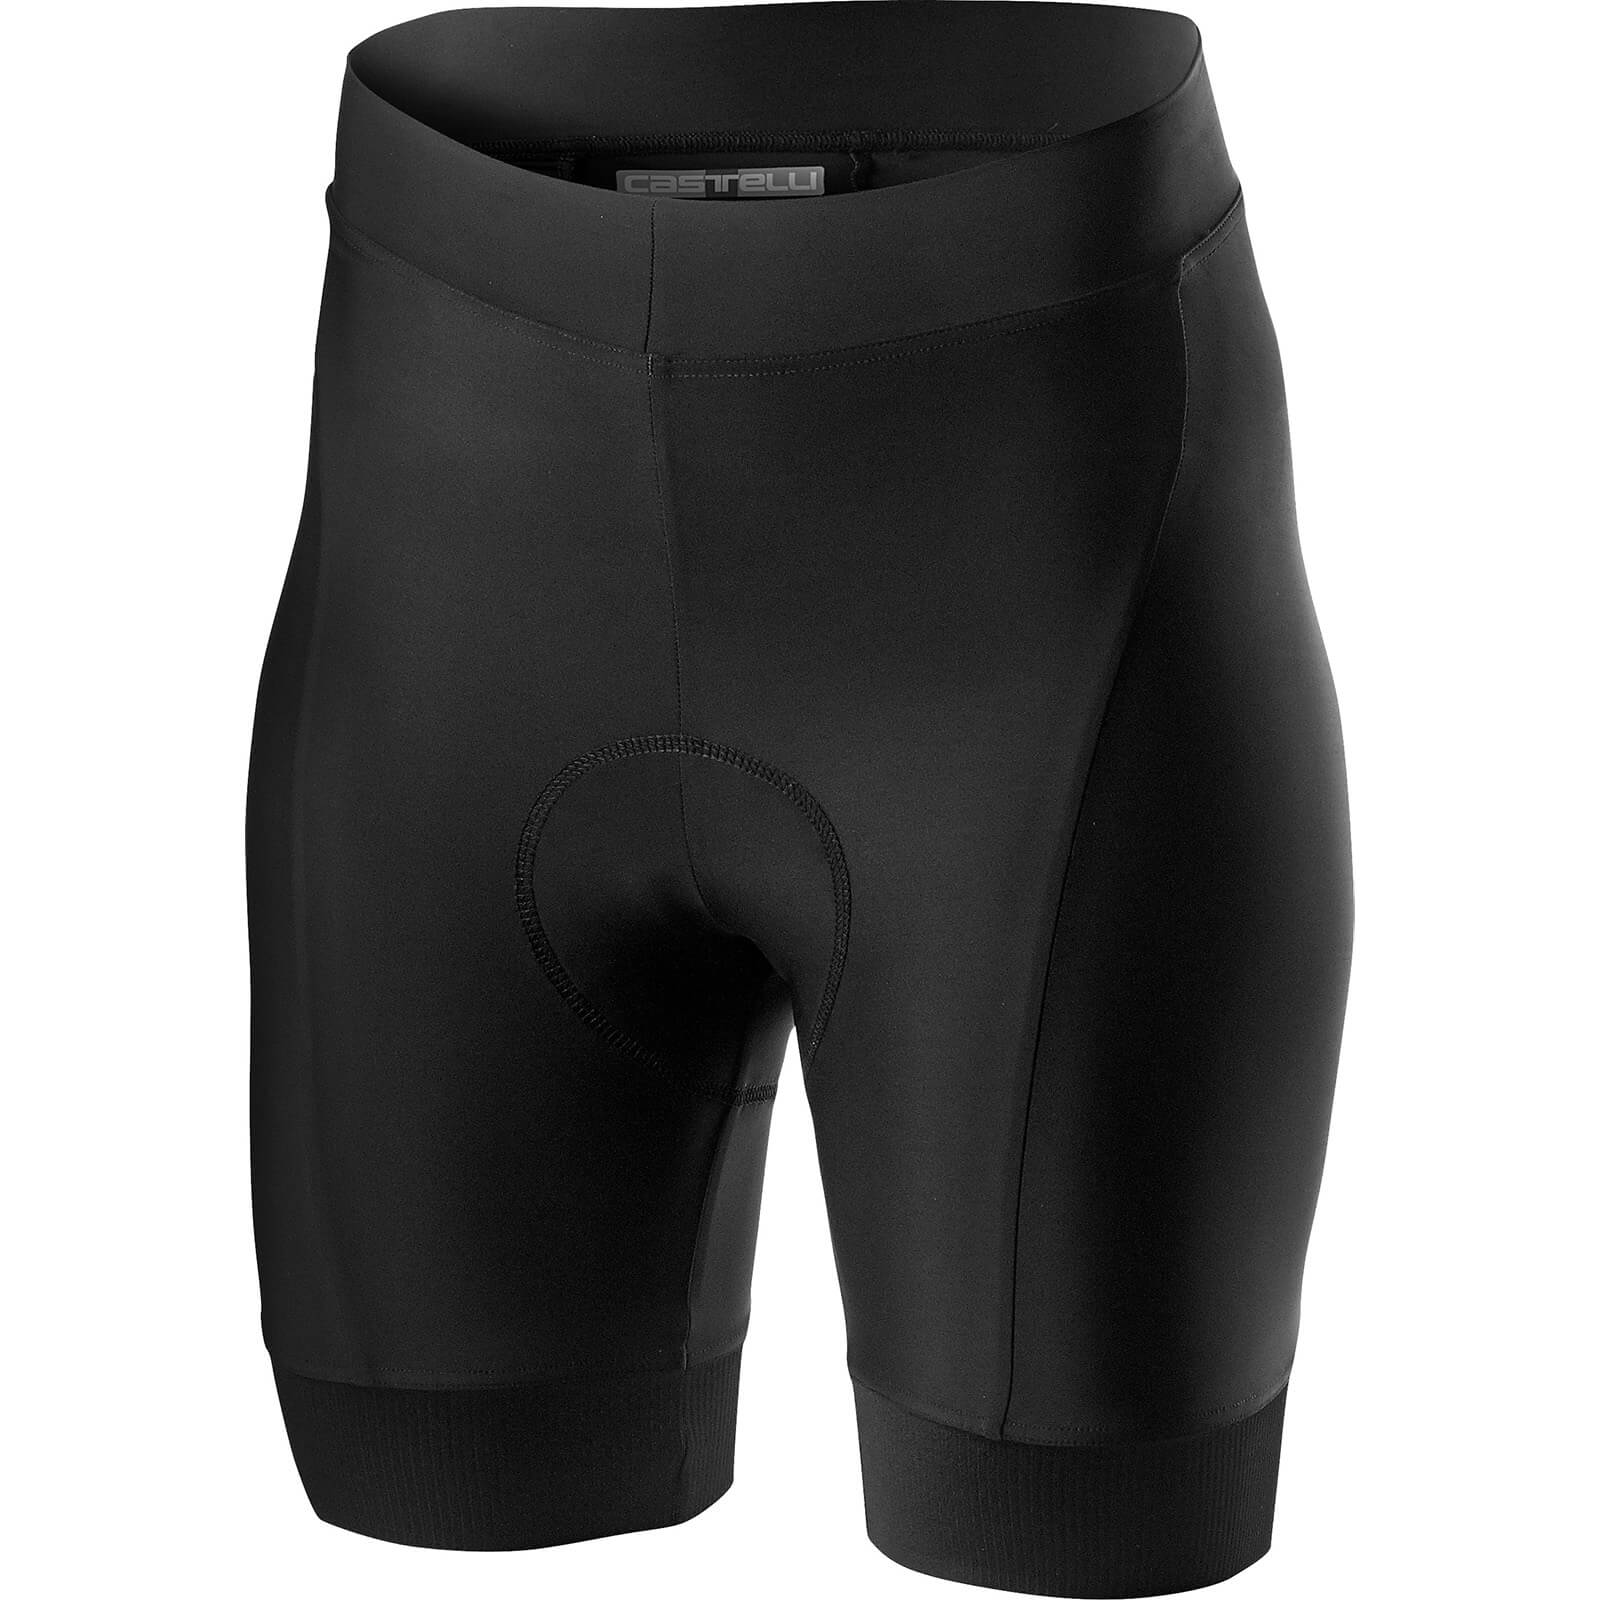 Castelli Prima Shorts - XS